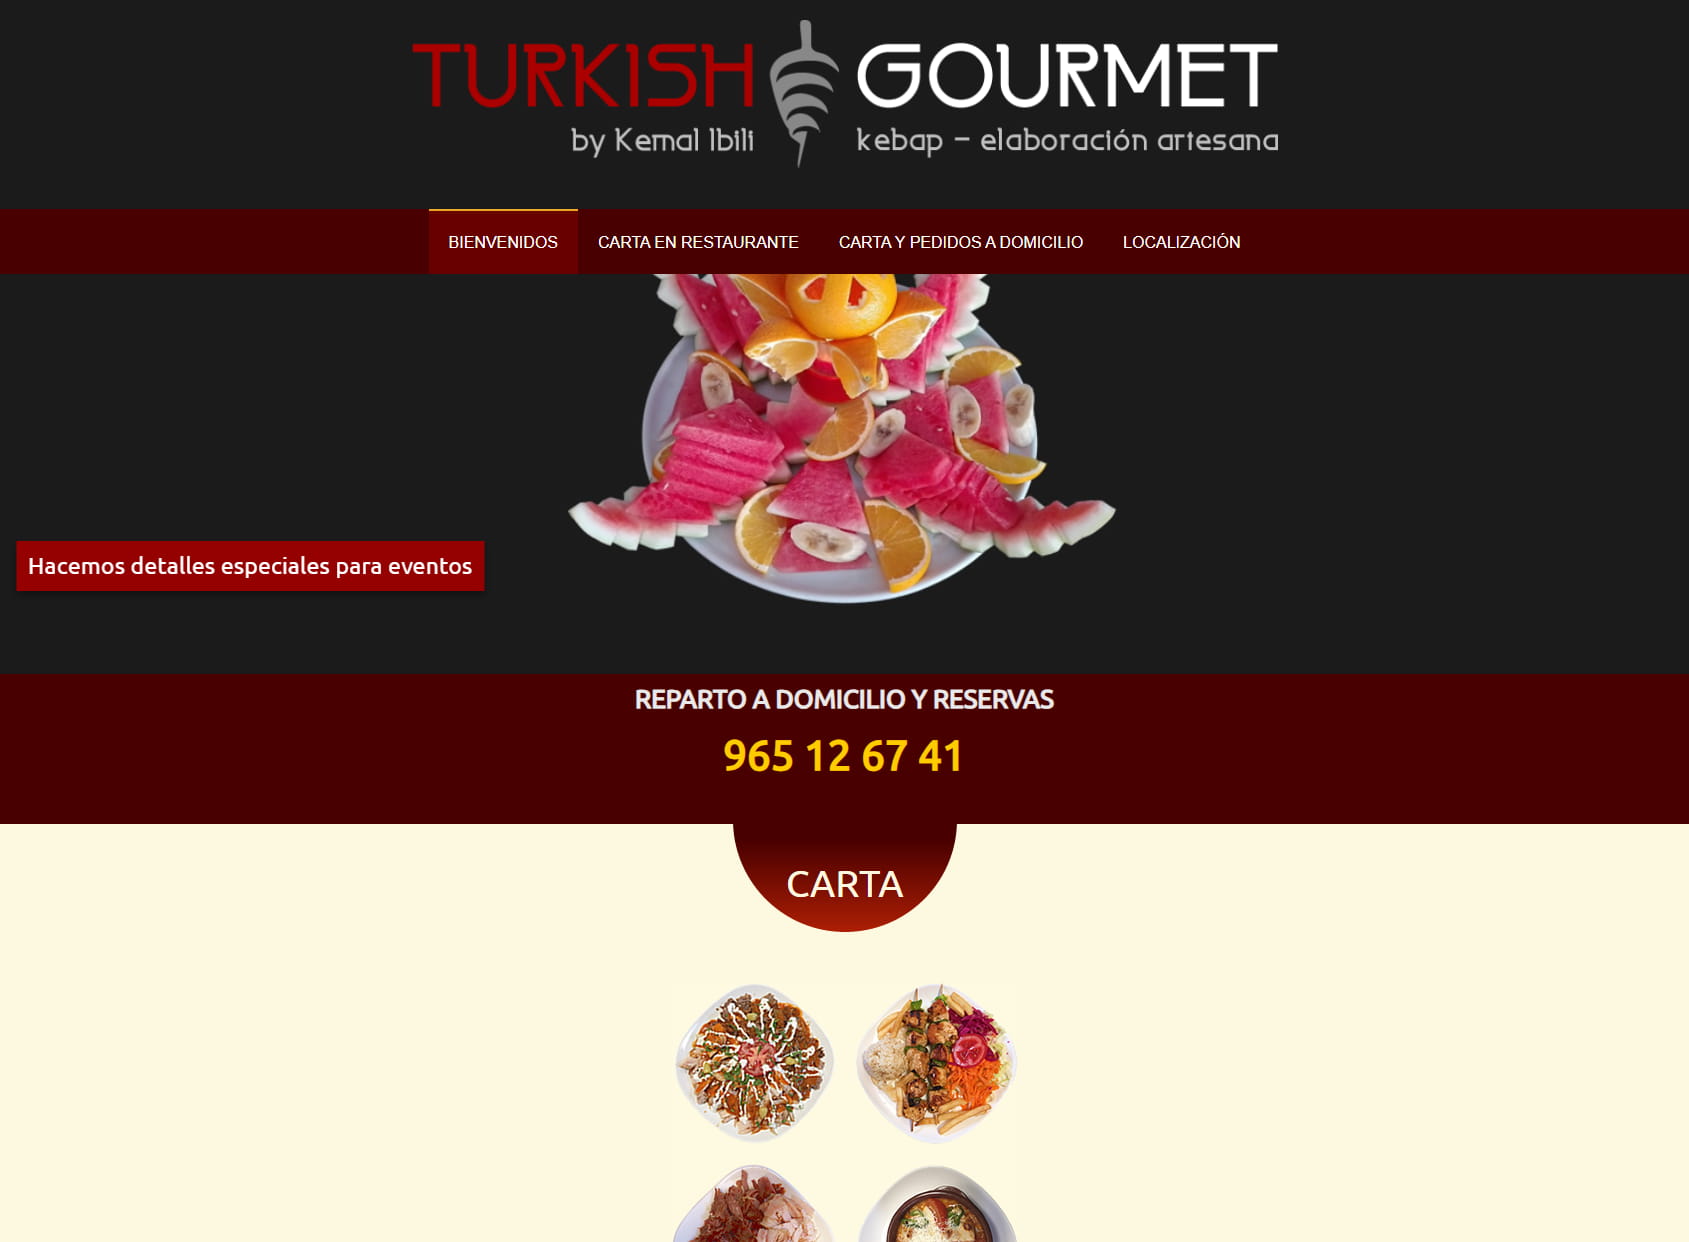 Turkish Gourmet - 965 12 67 41